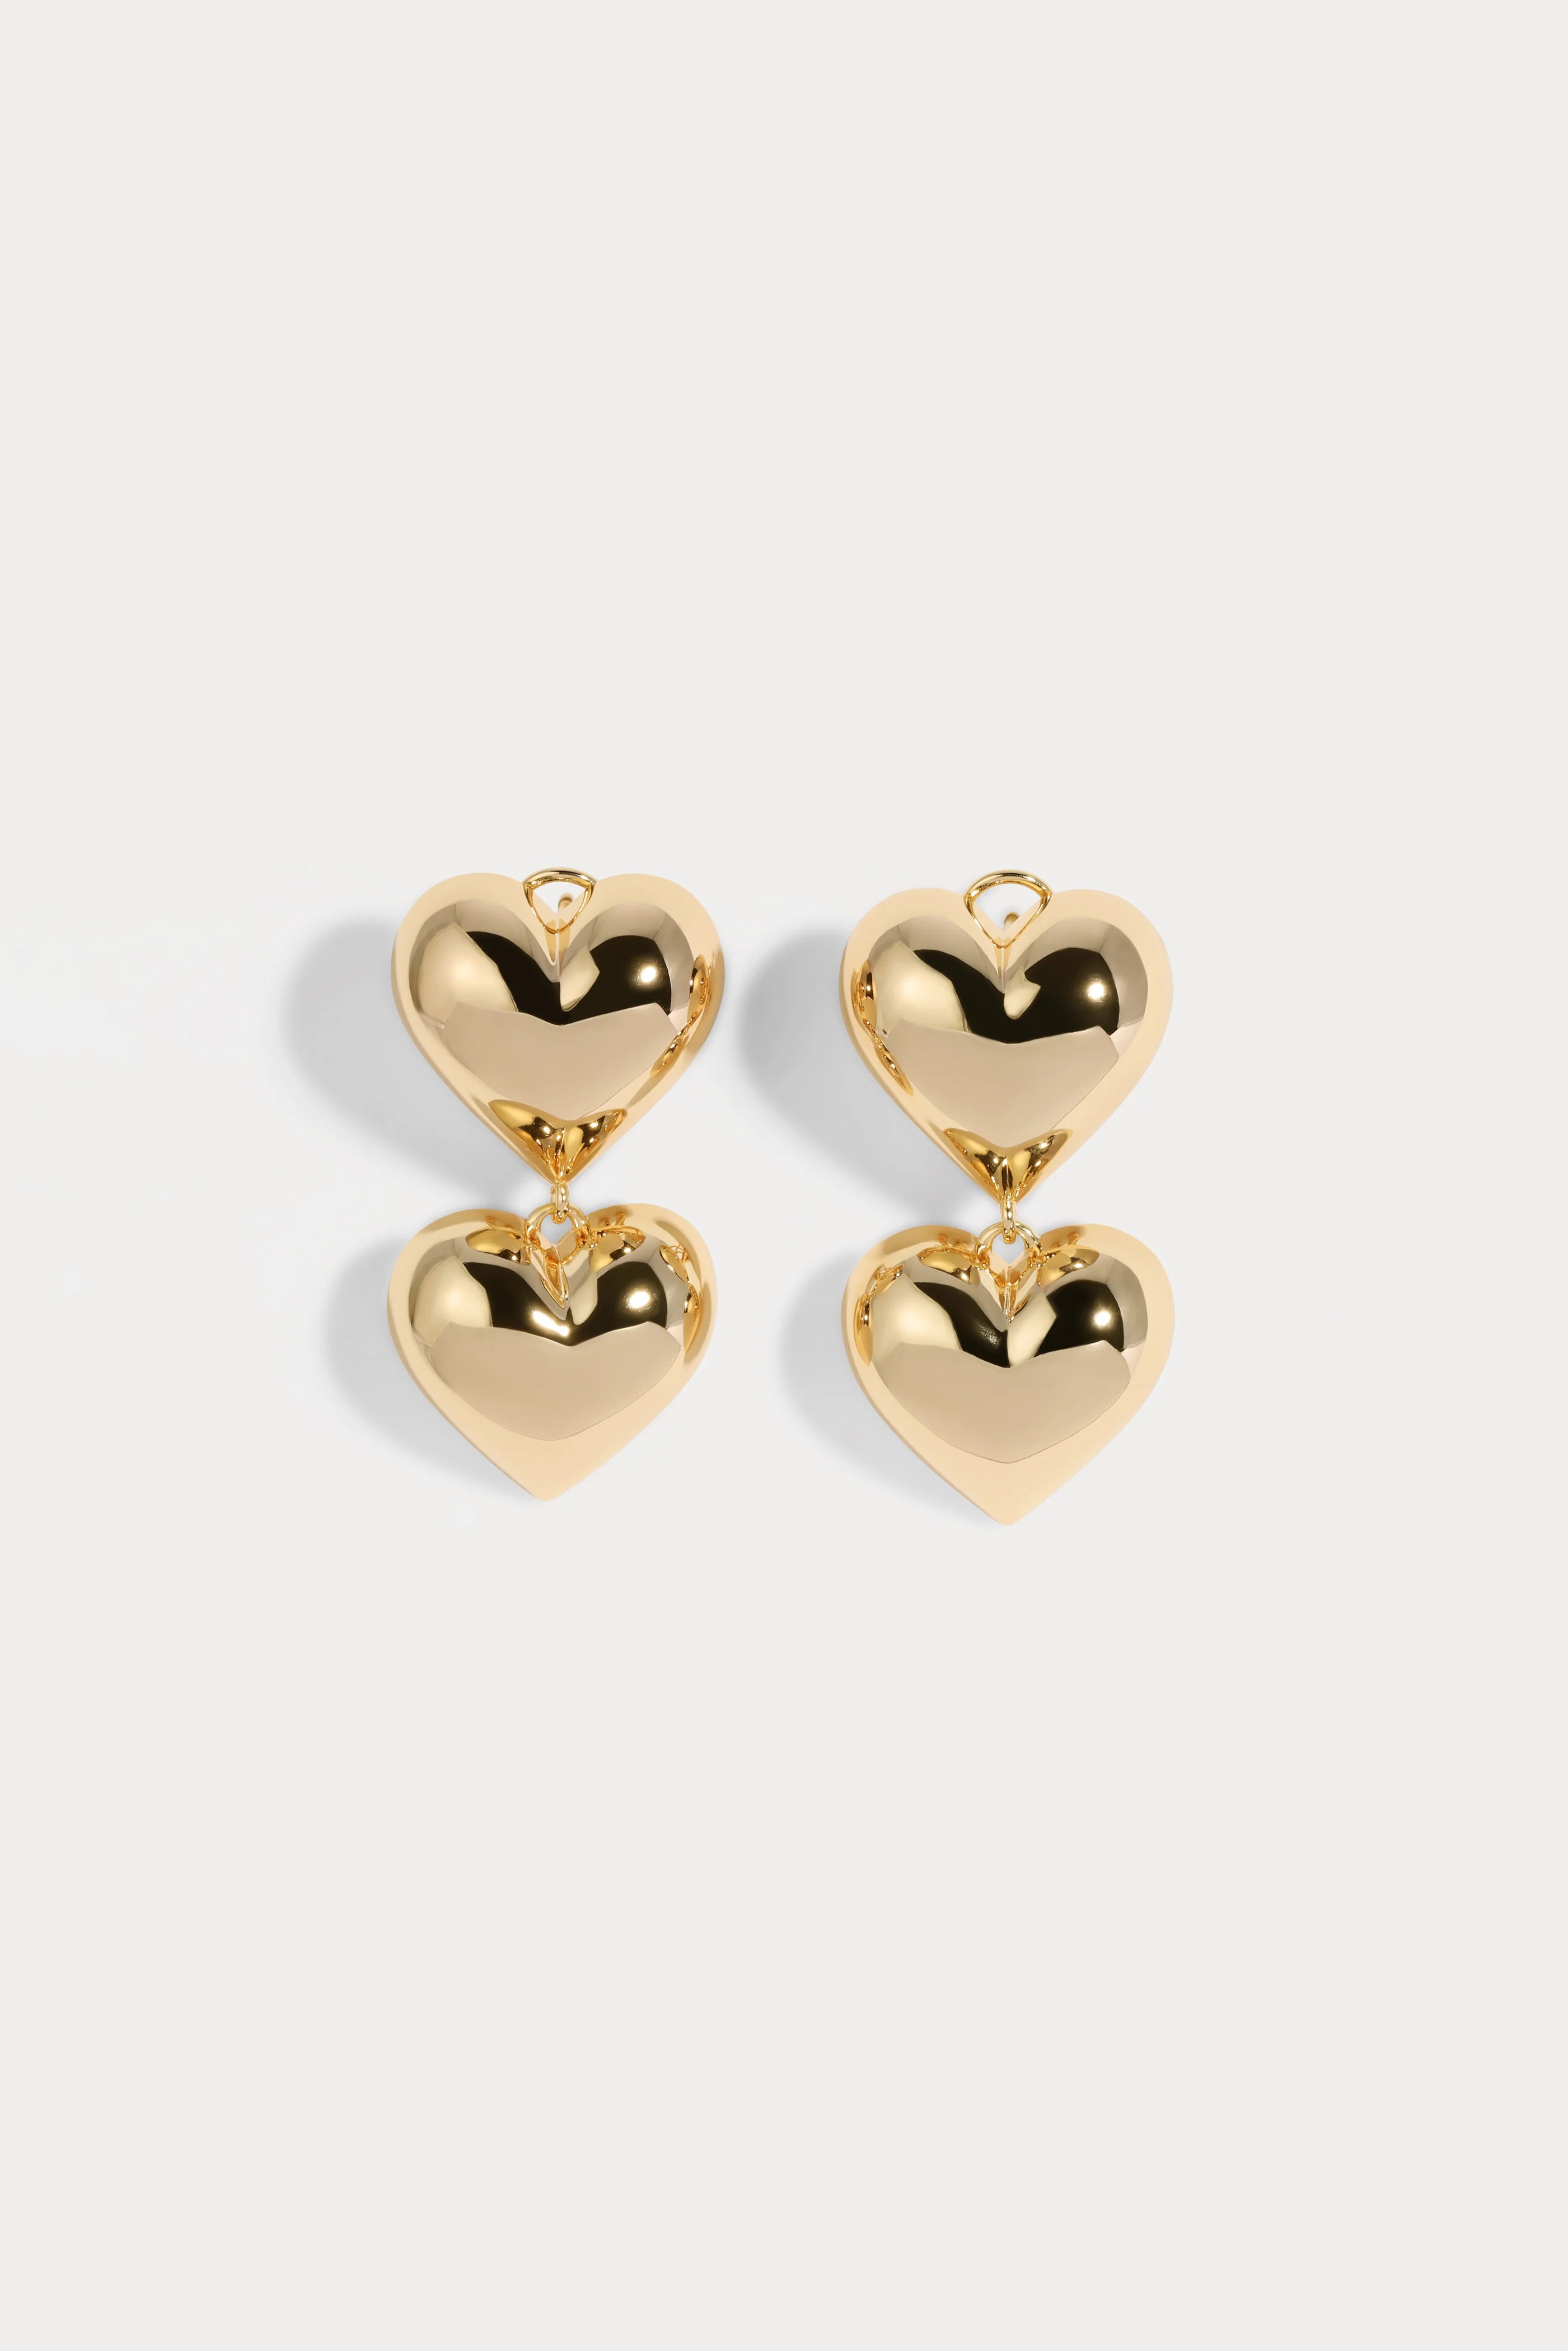 Lili Claspe Small Bubble Heart Earrings - Gold